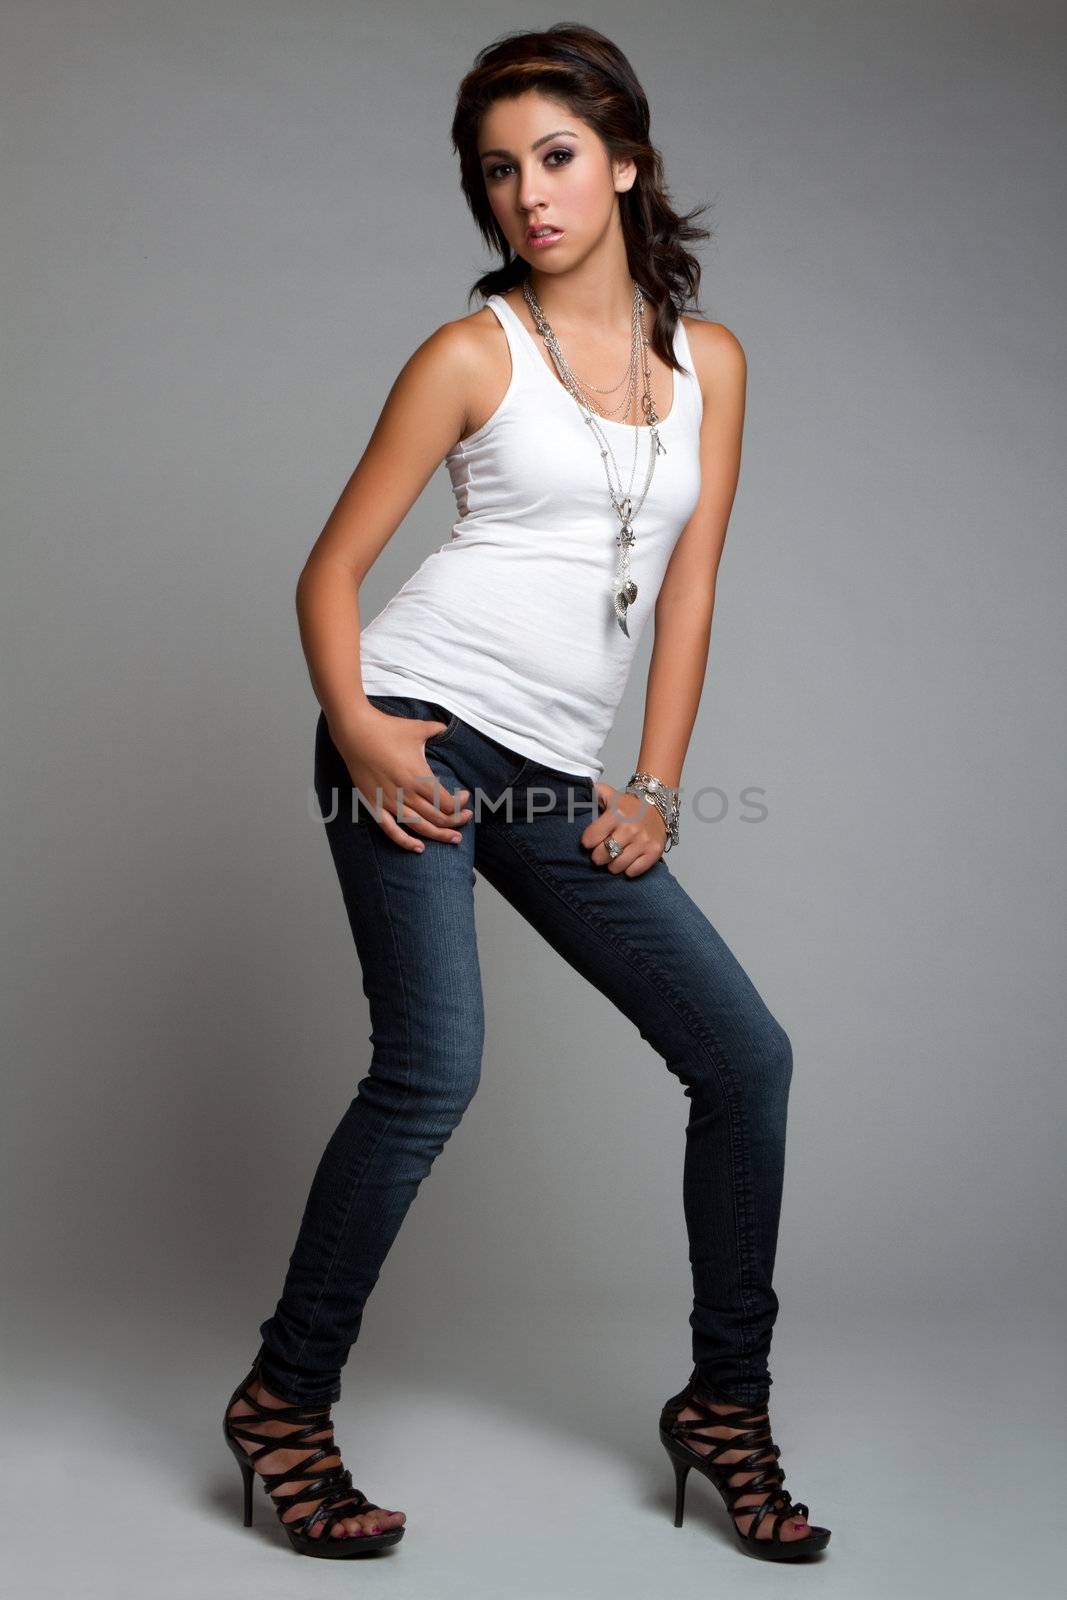 Teen fashion model girl posing